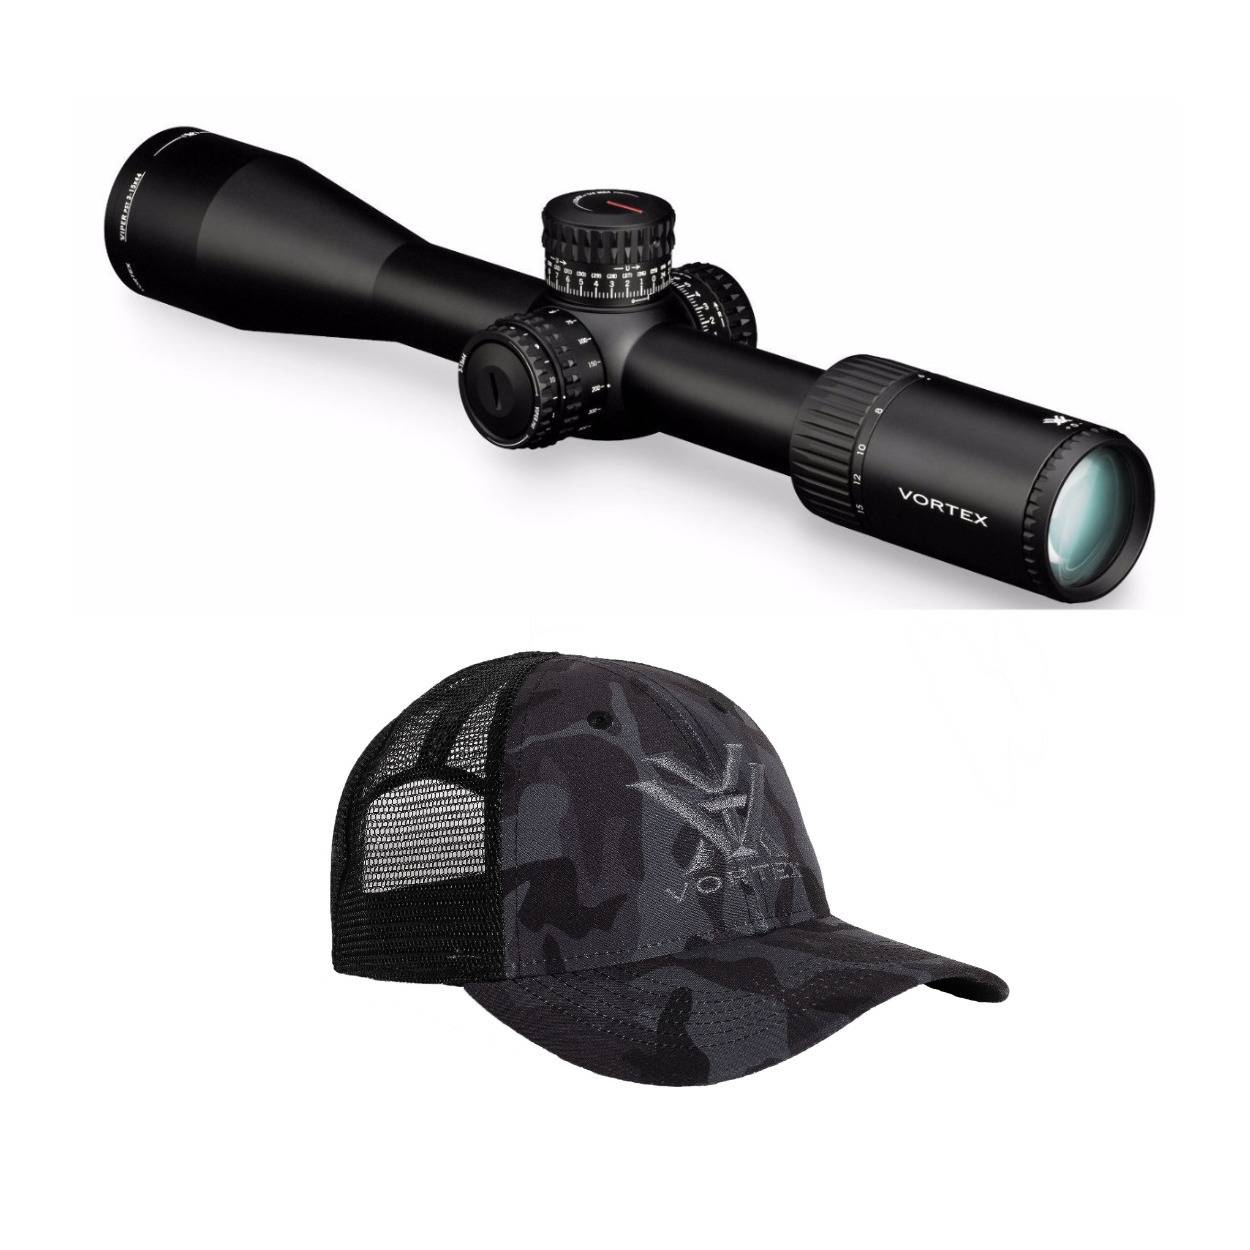 Vortex Viper PST Gen II 5-25x50 Riflescope (EBR-4 MOA Reticle) and Vortex Hat